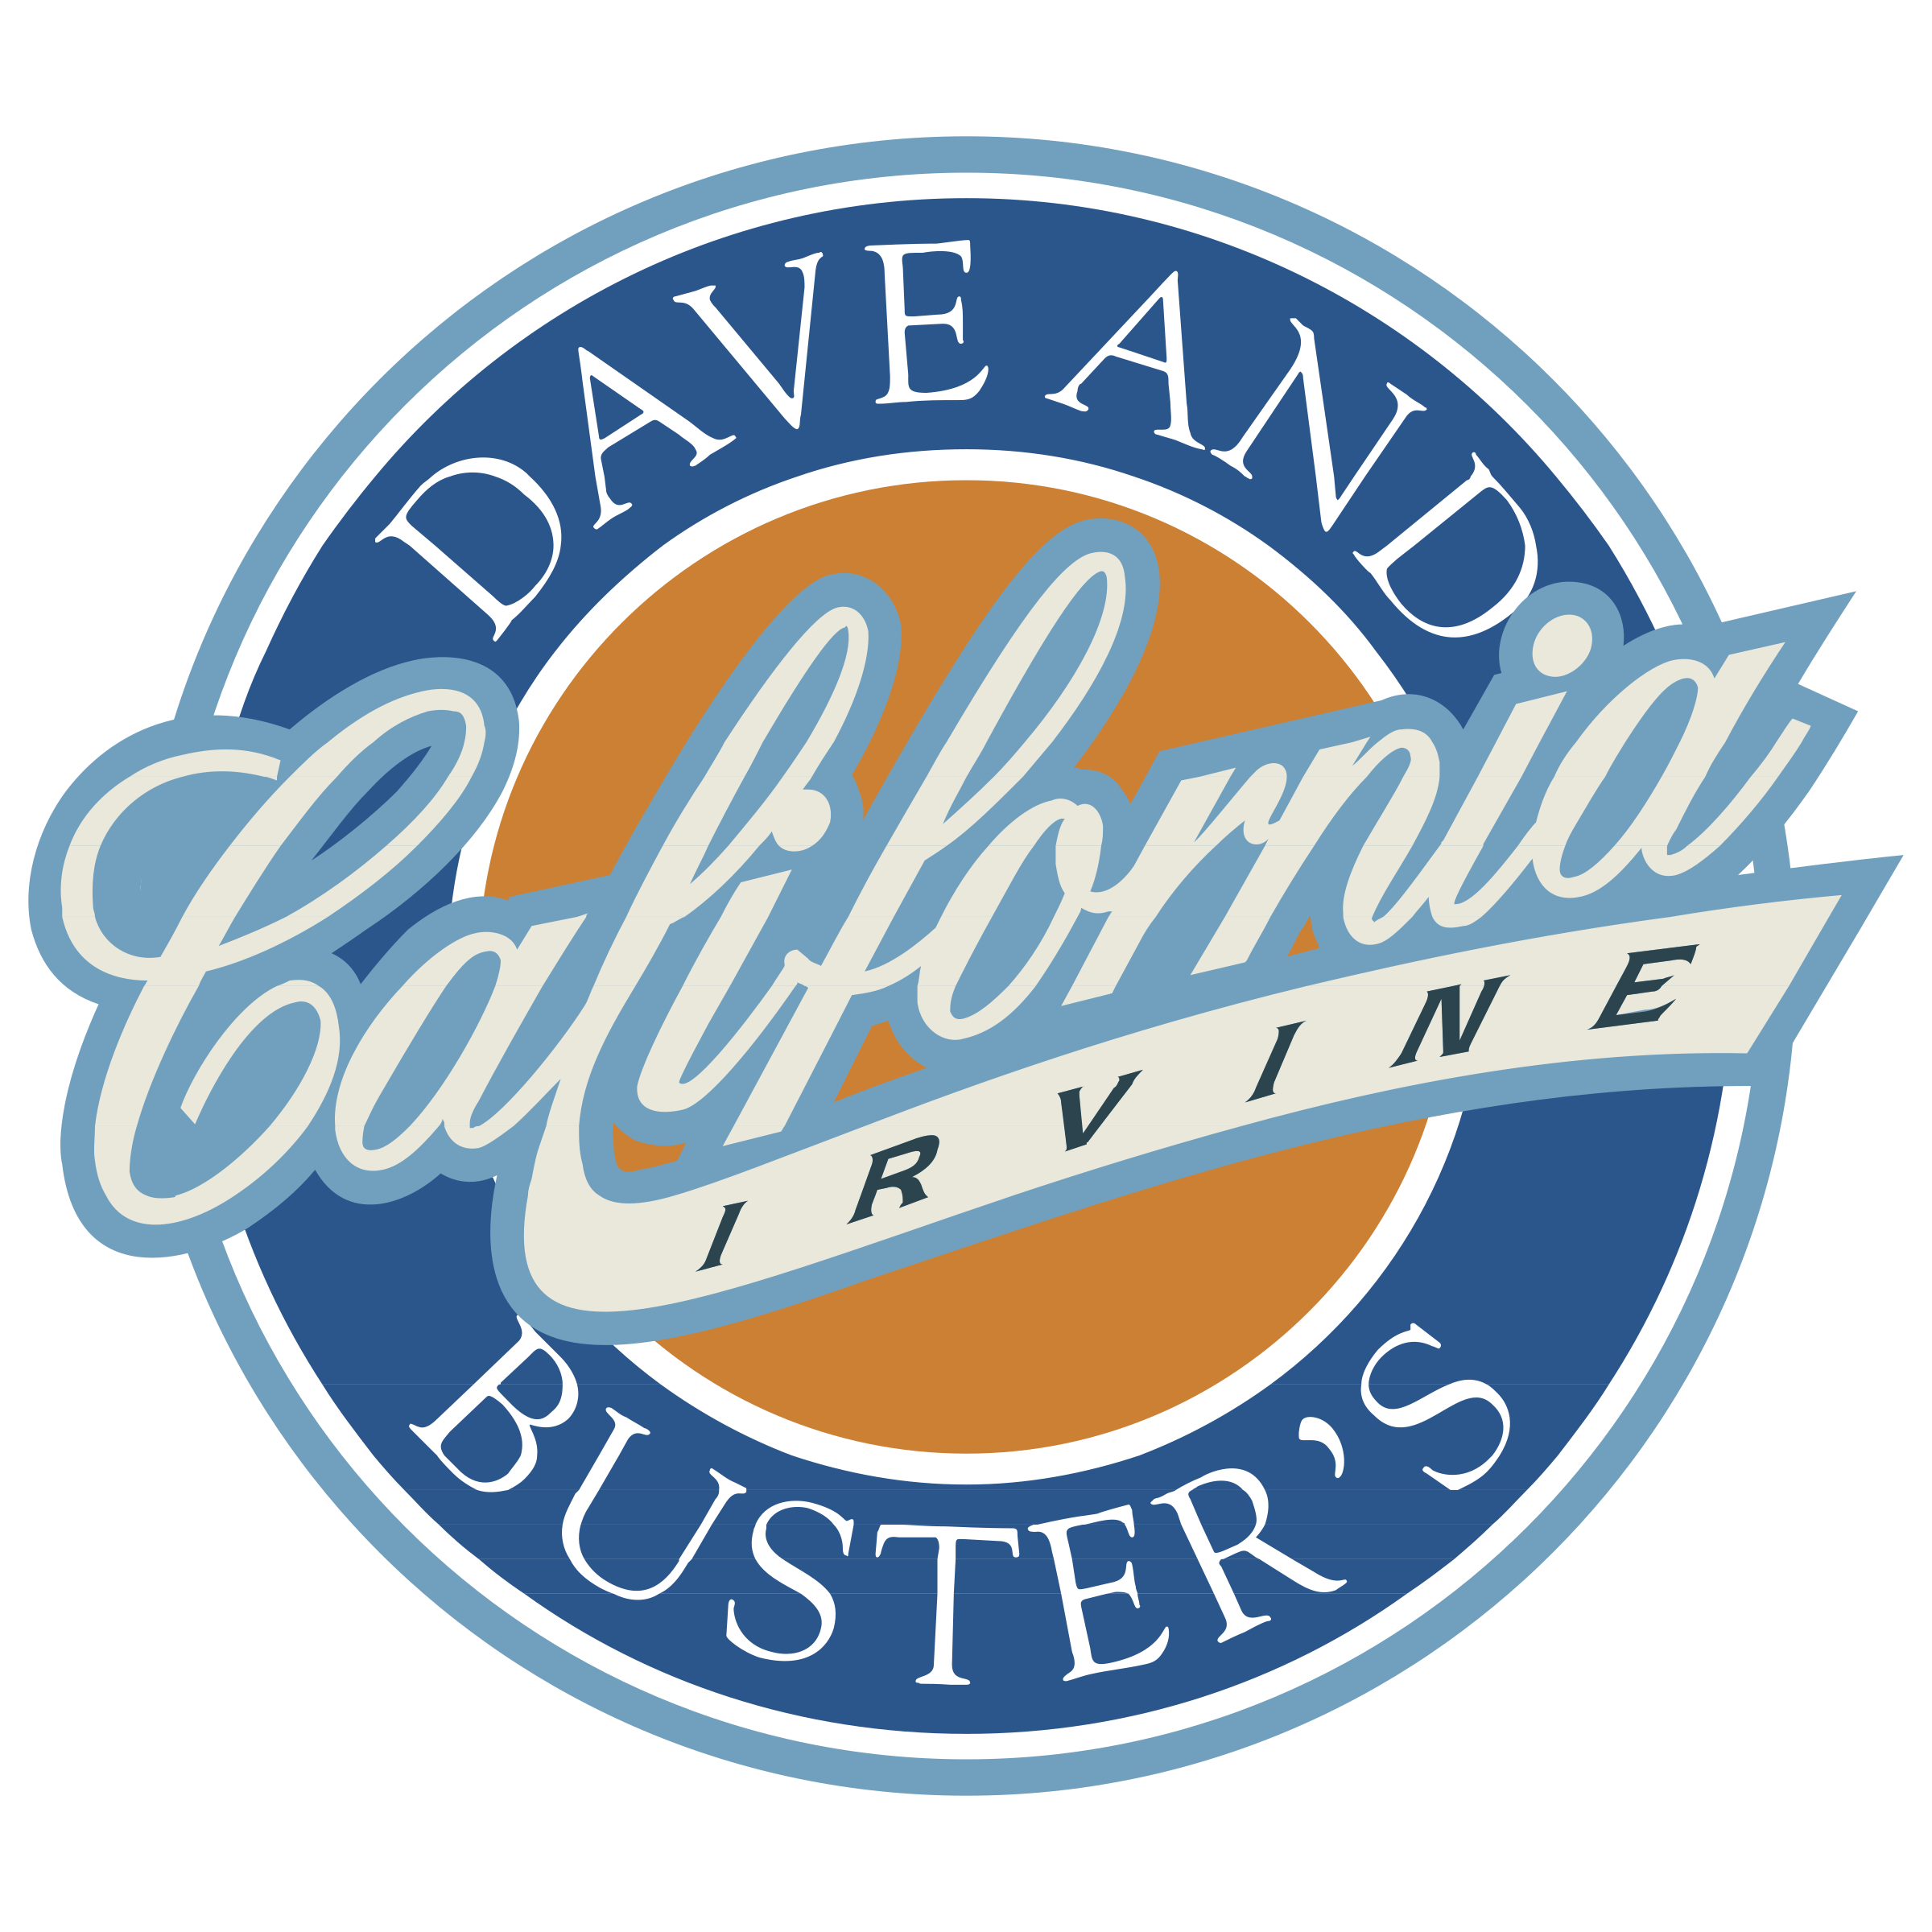 Irvine Logo - Dave And Buster's California Irvine Logo PNG Transparent & SVG ...